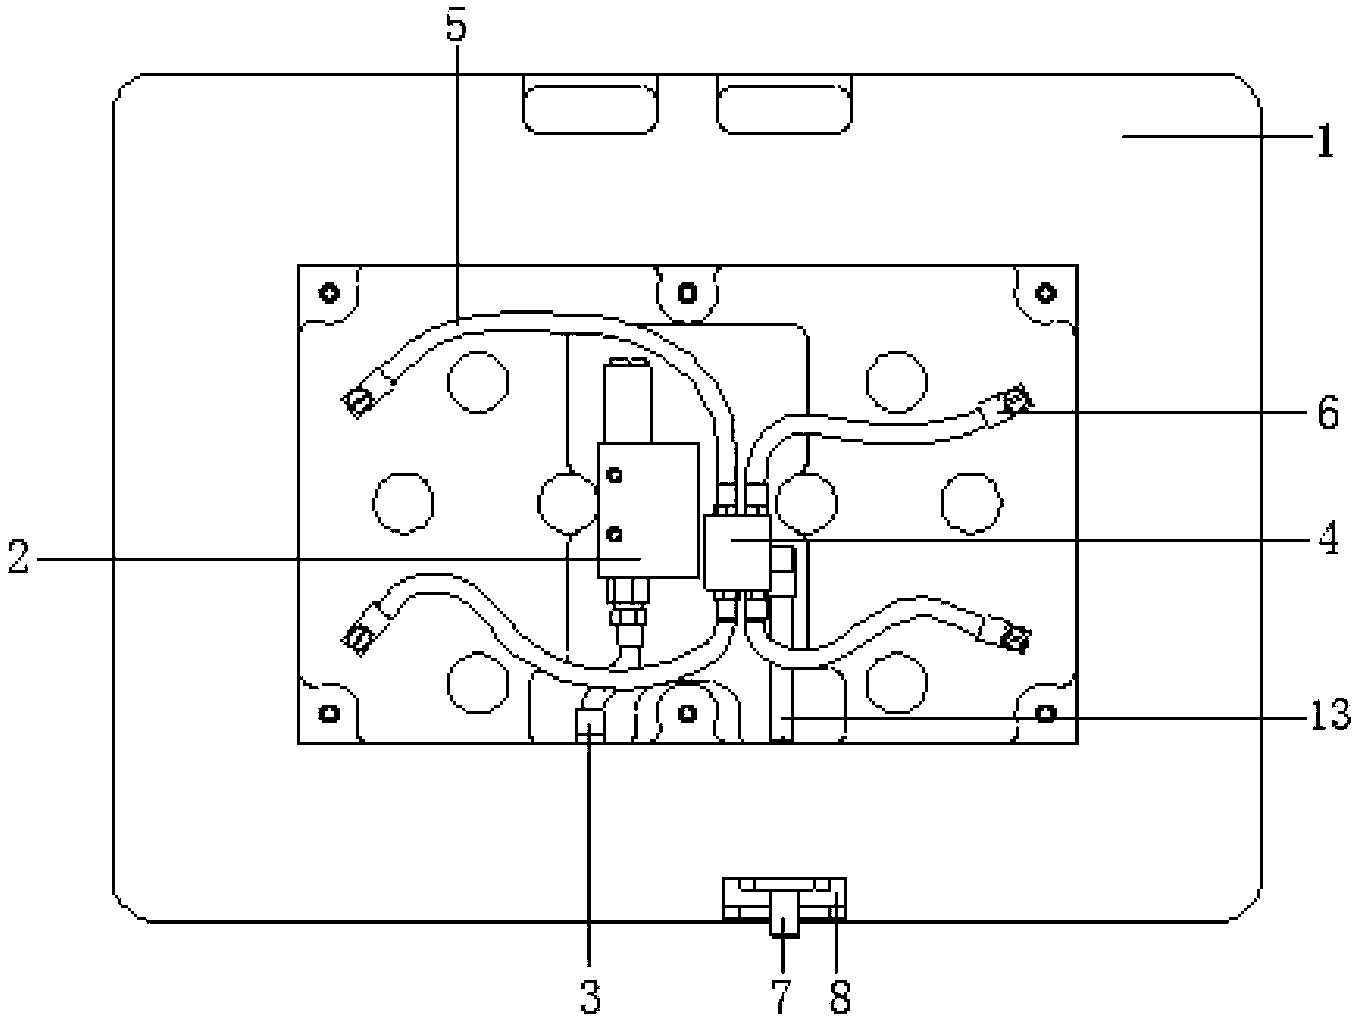 Adsorption jig with built-in vacuum generator